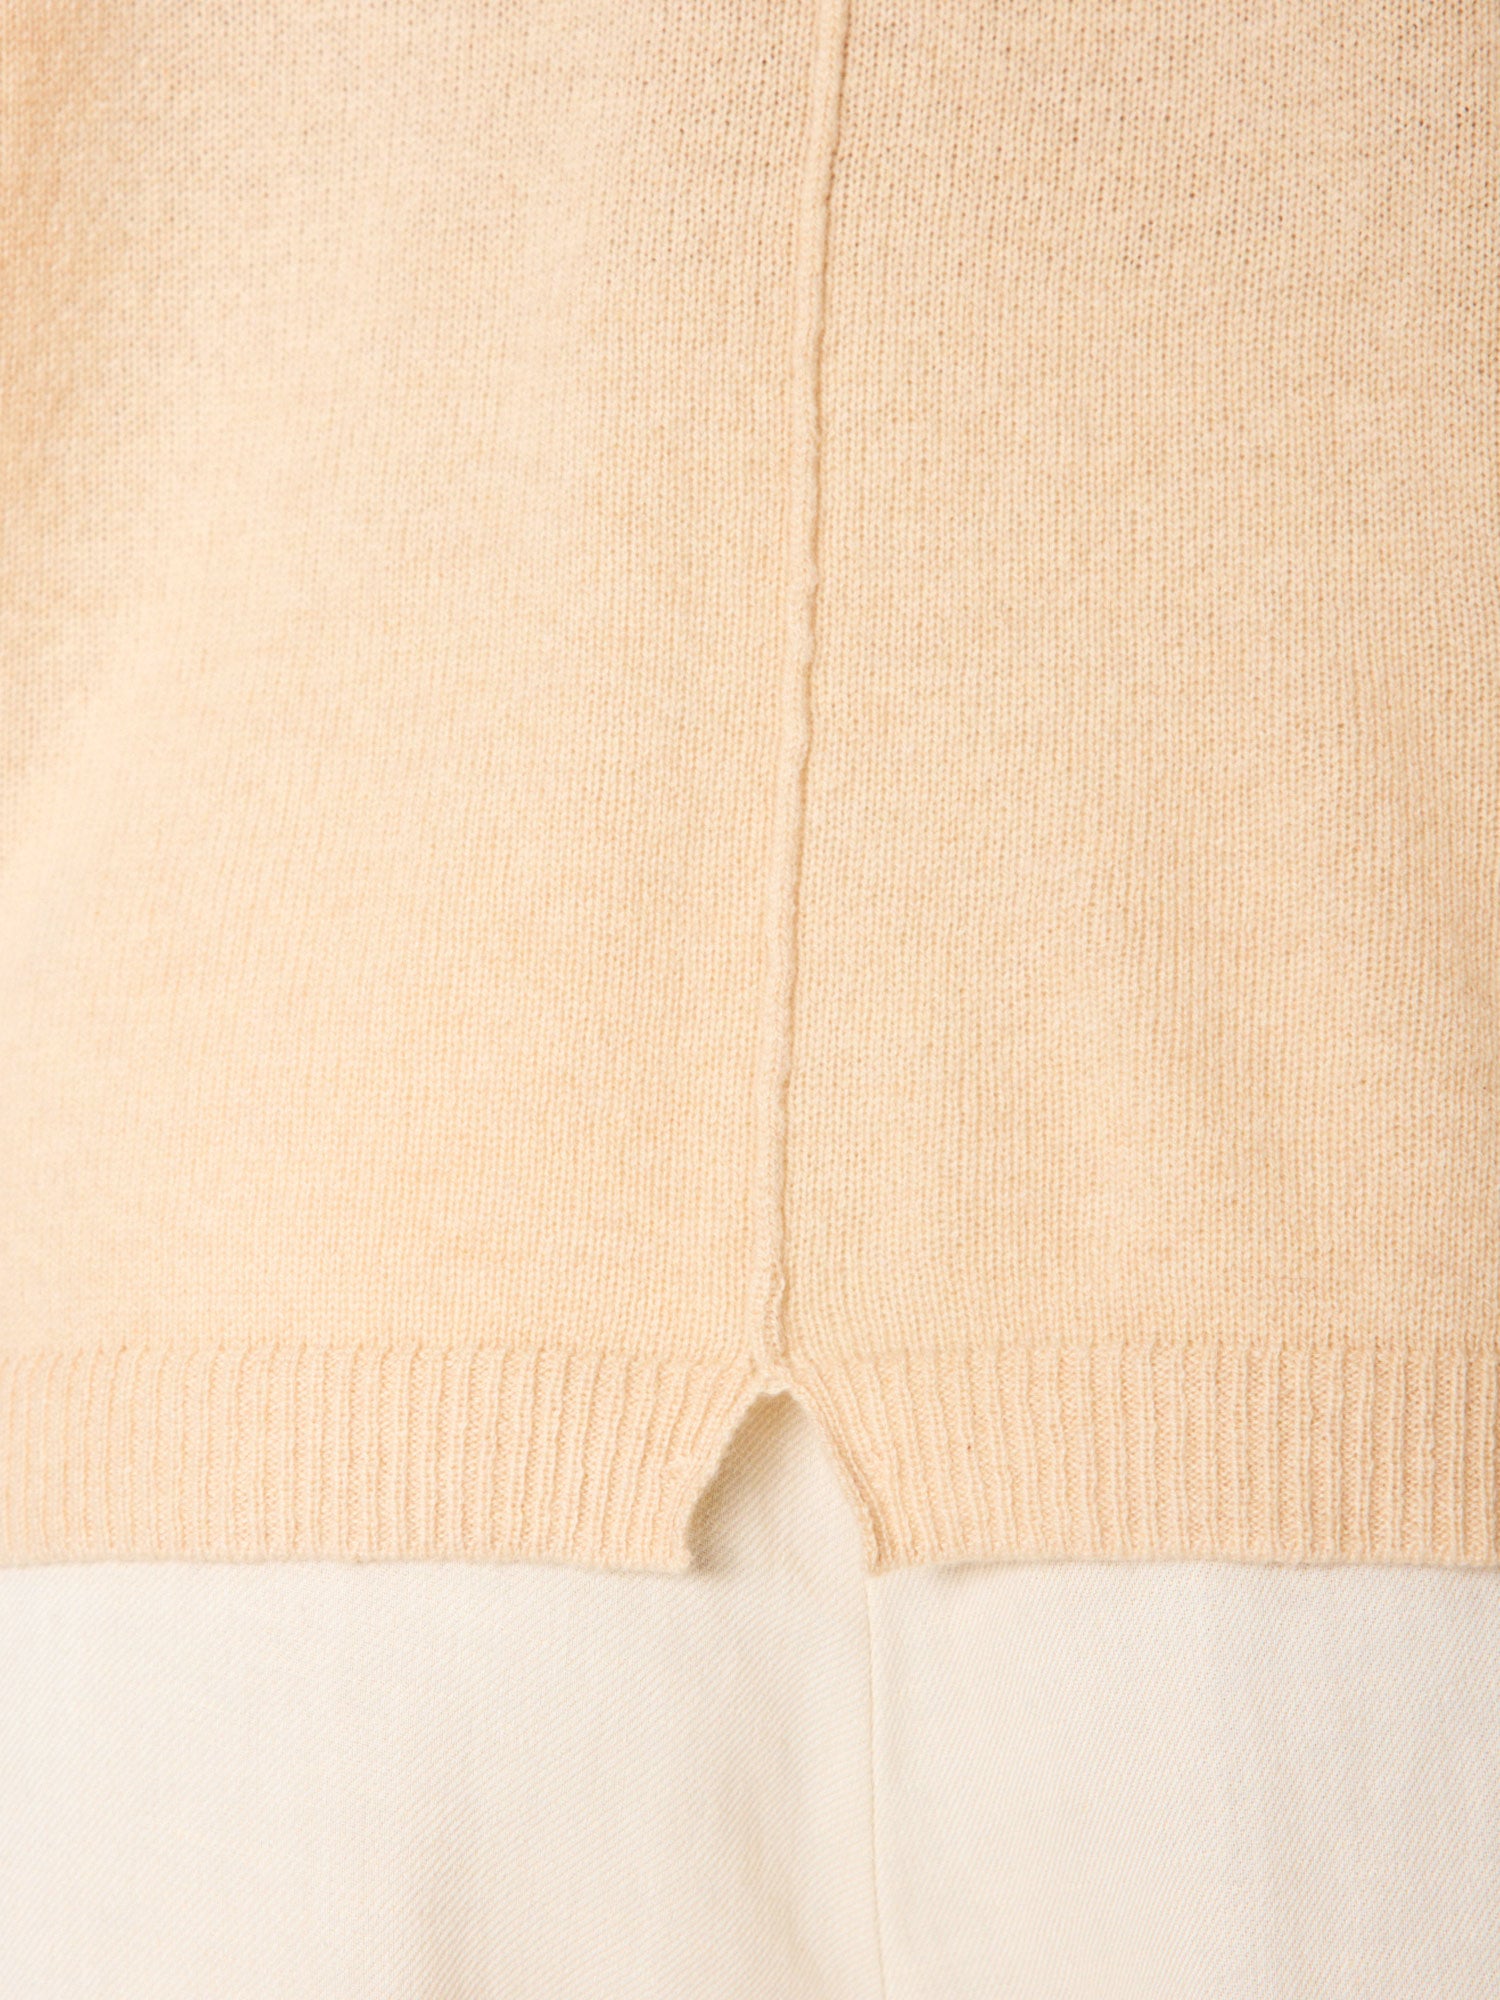 Ophi cashmere tan V-neck t-shirt top close up